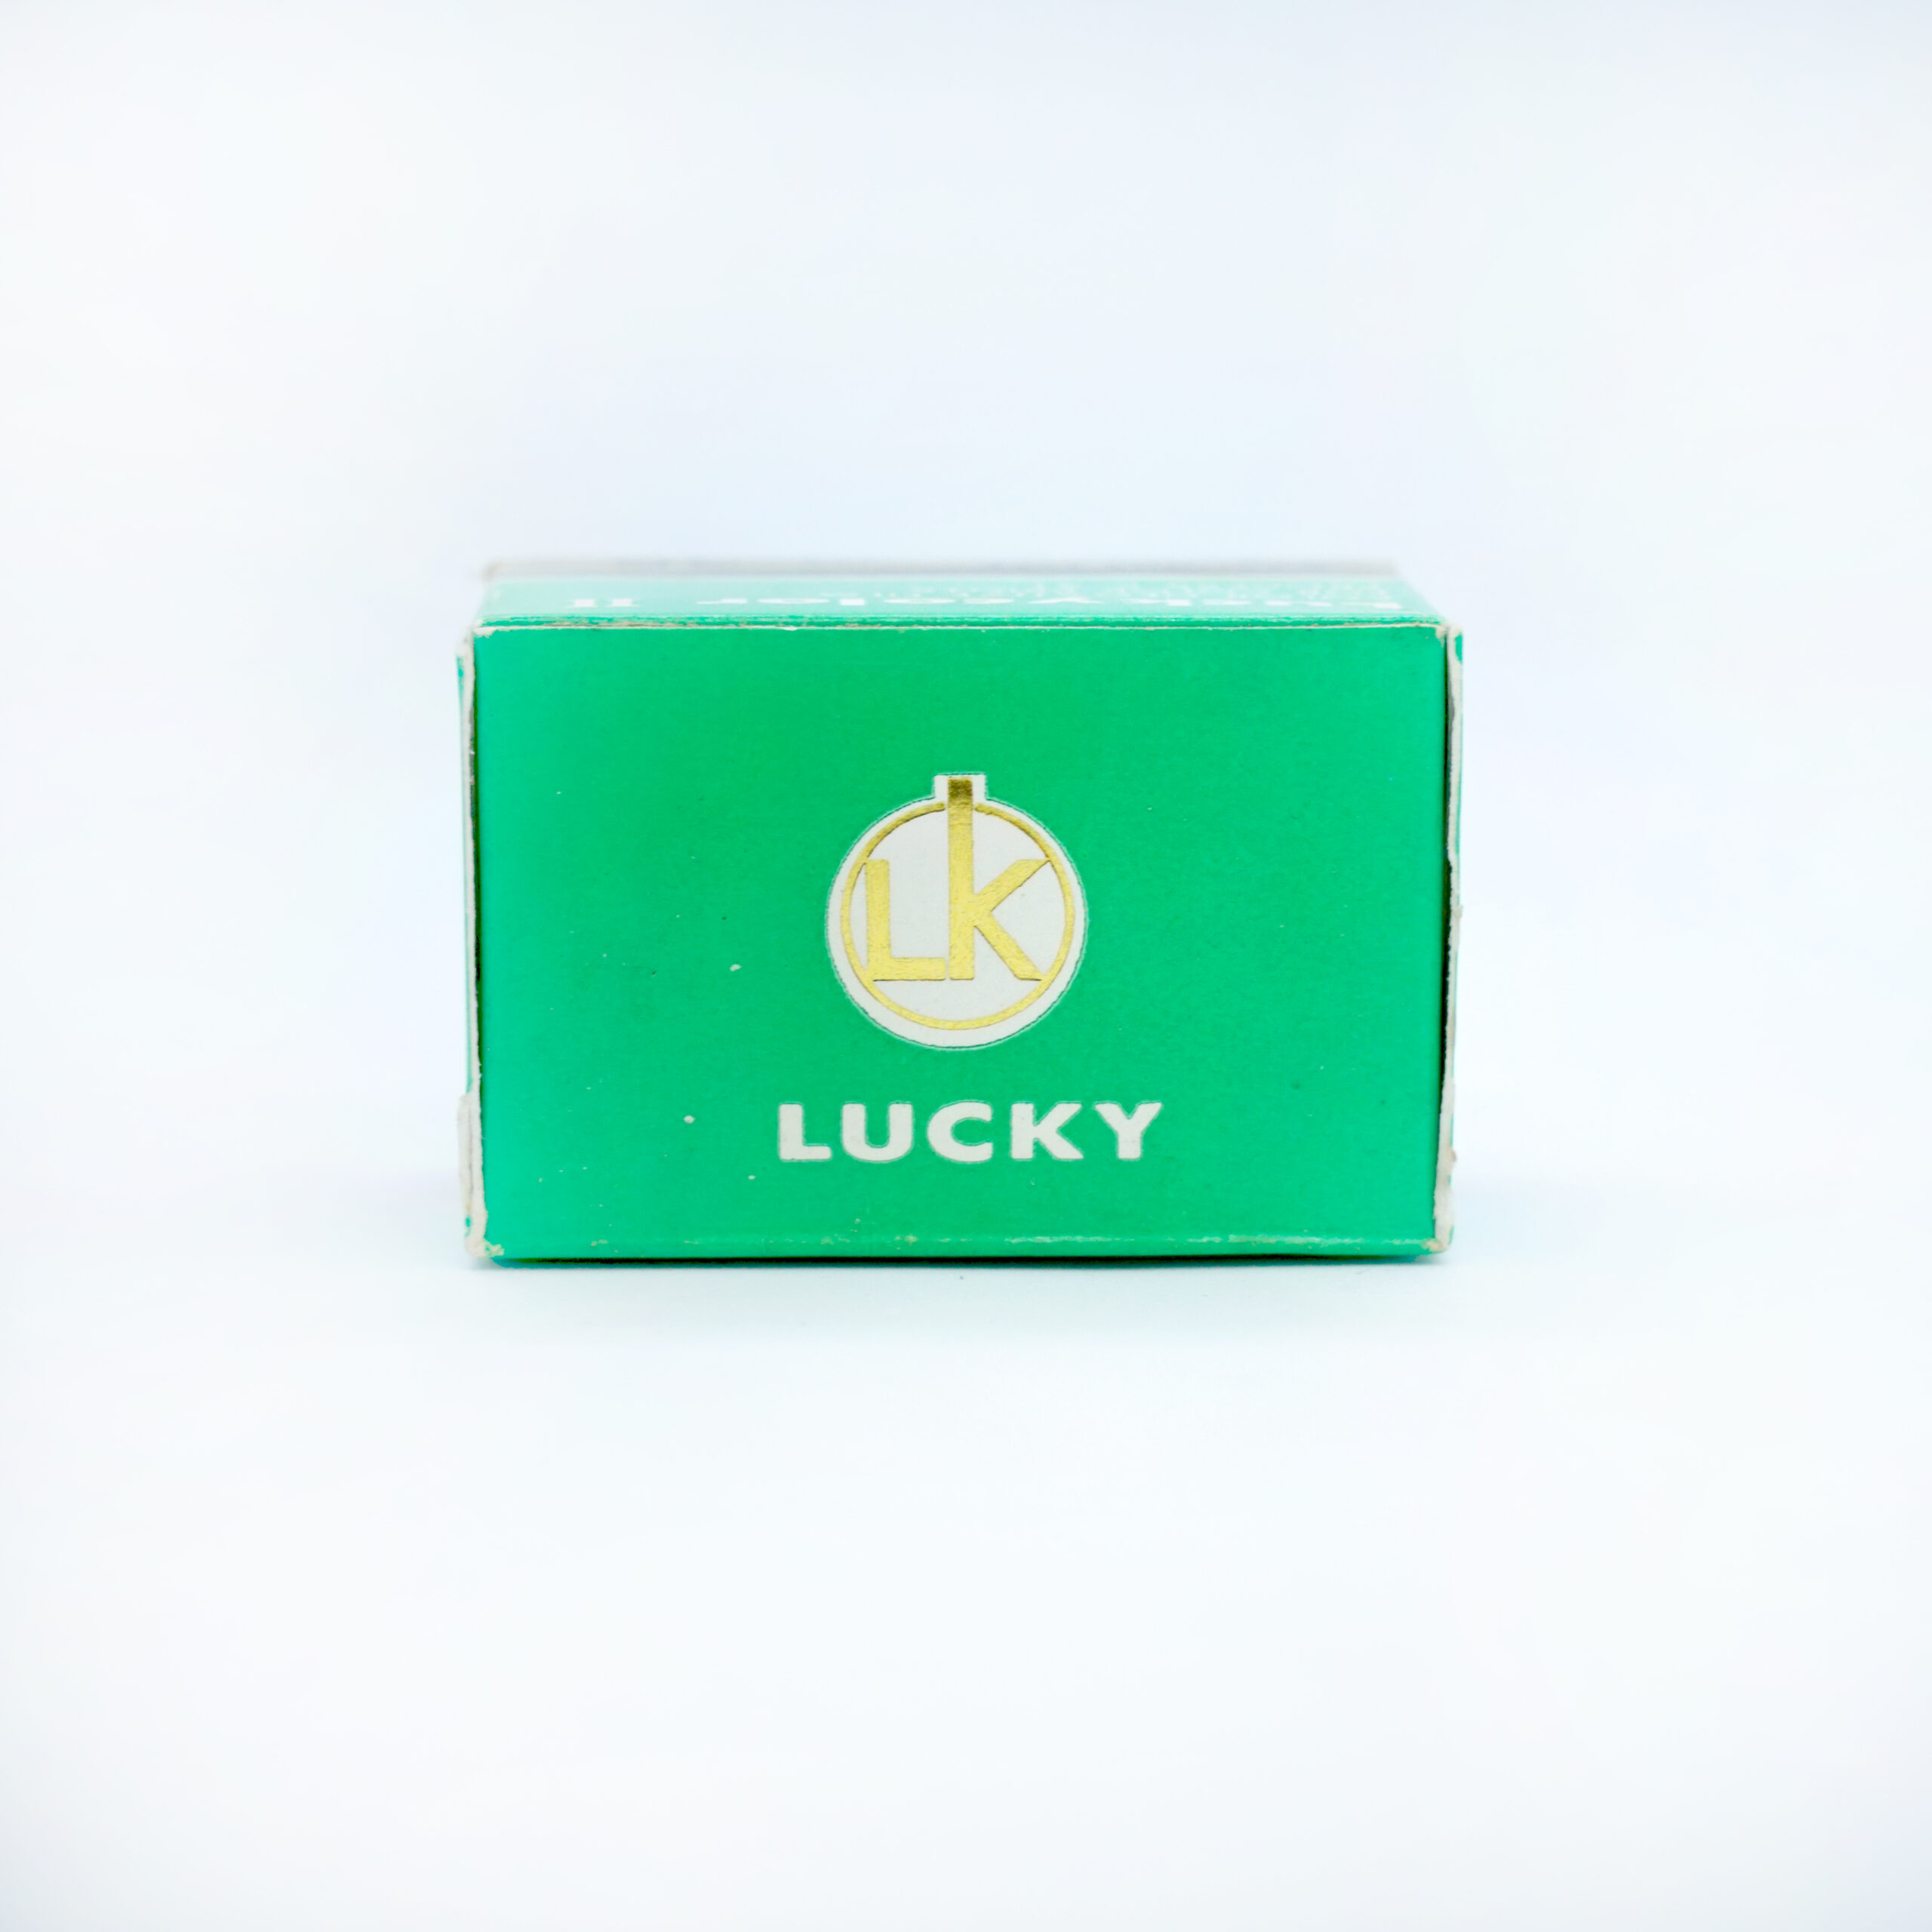 Film Lucky color II ISO 100 135/36 po terminie